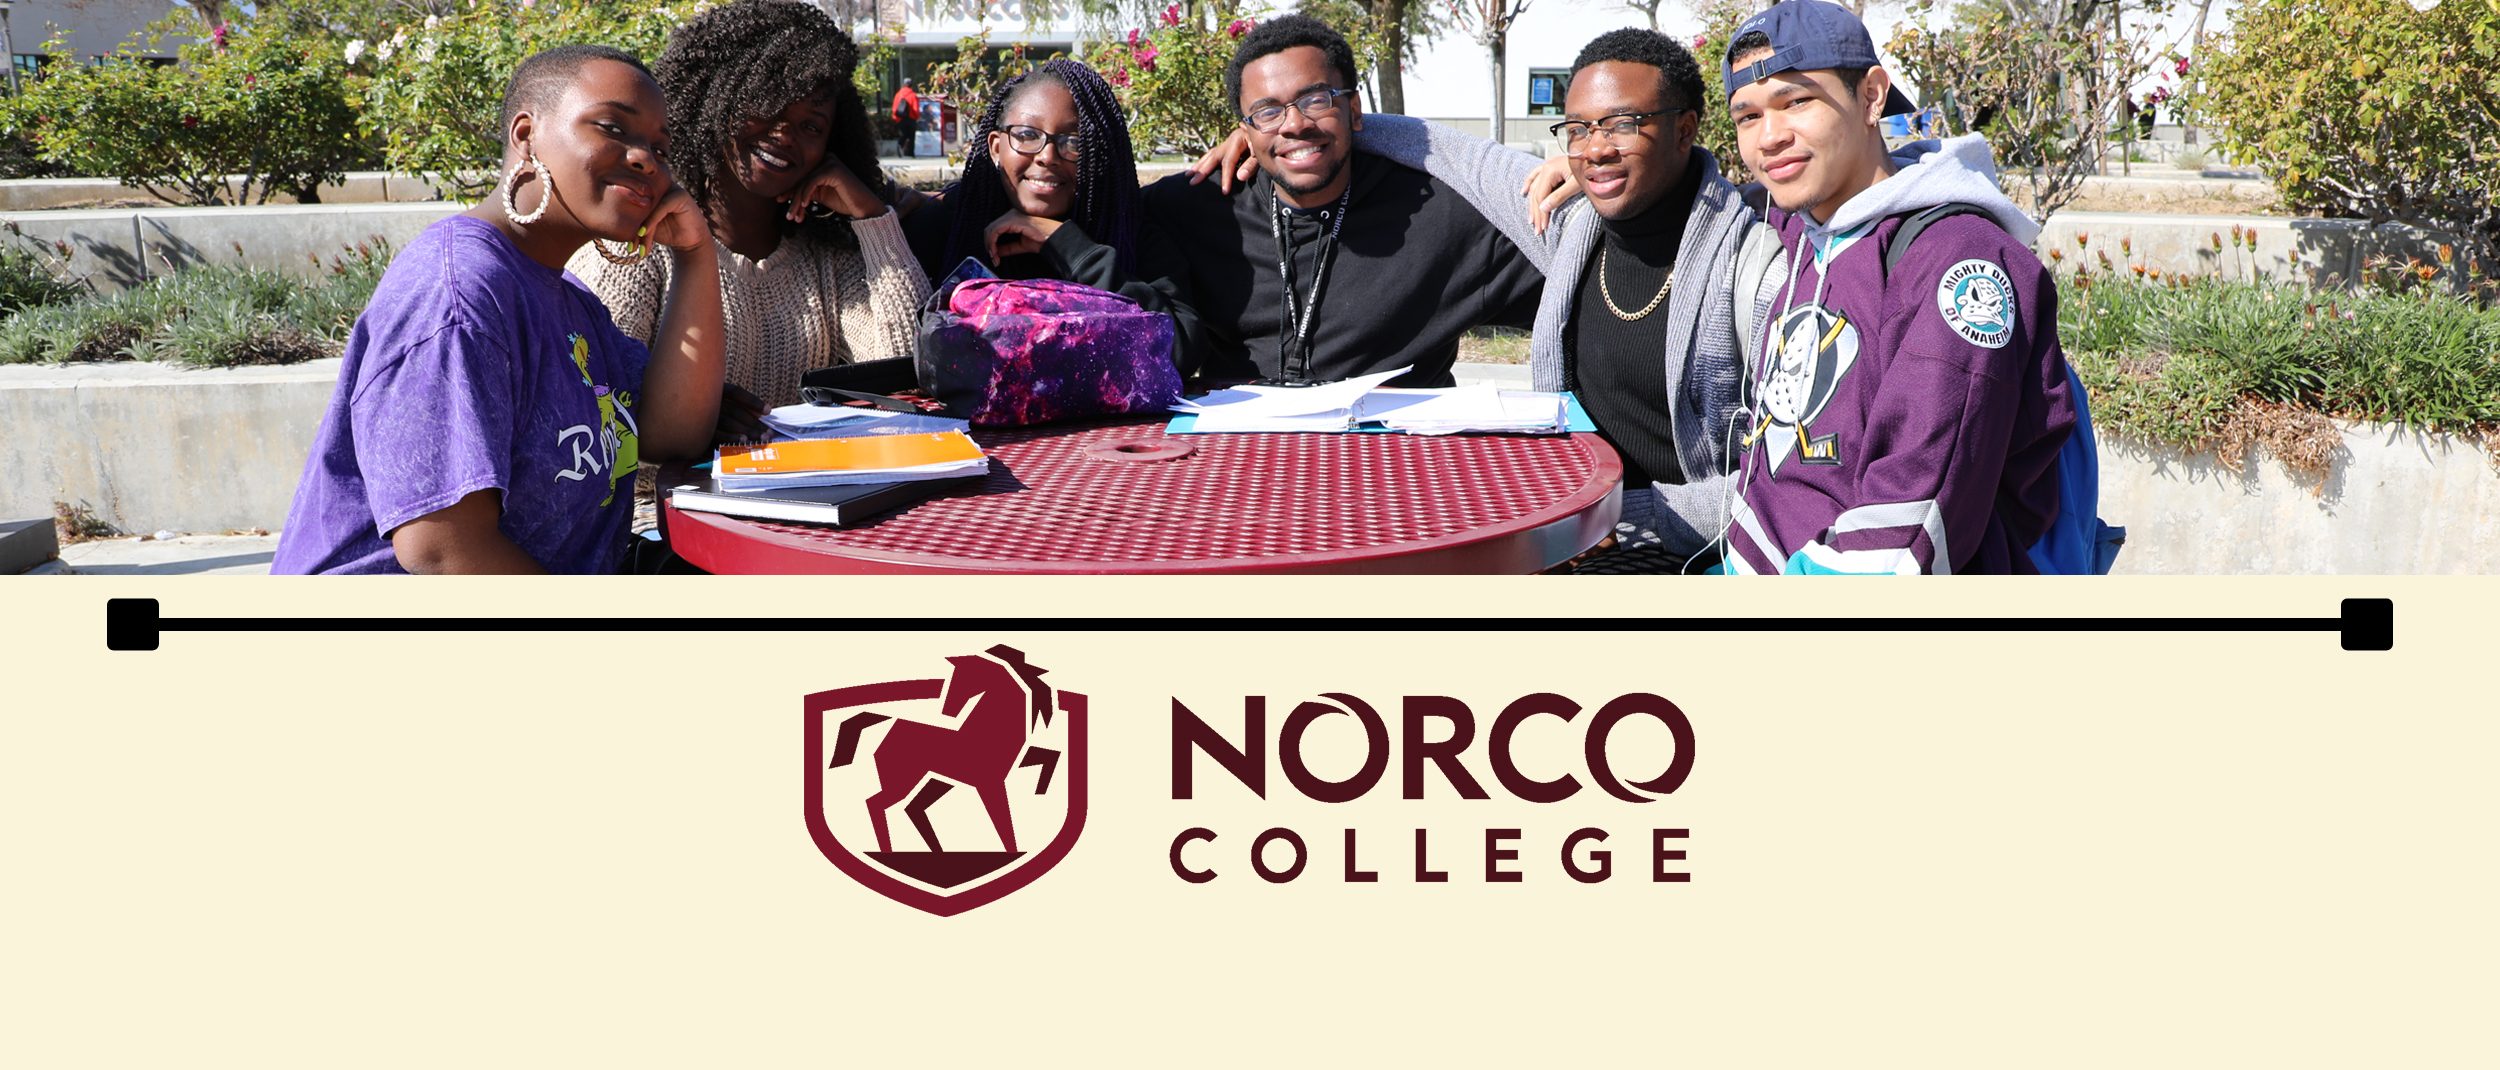 Norco College hero image banner